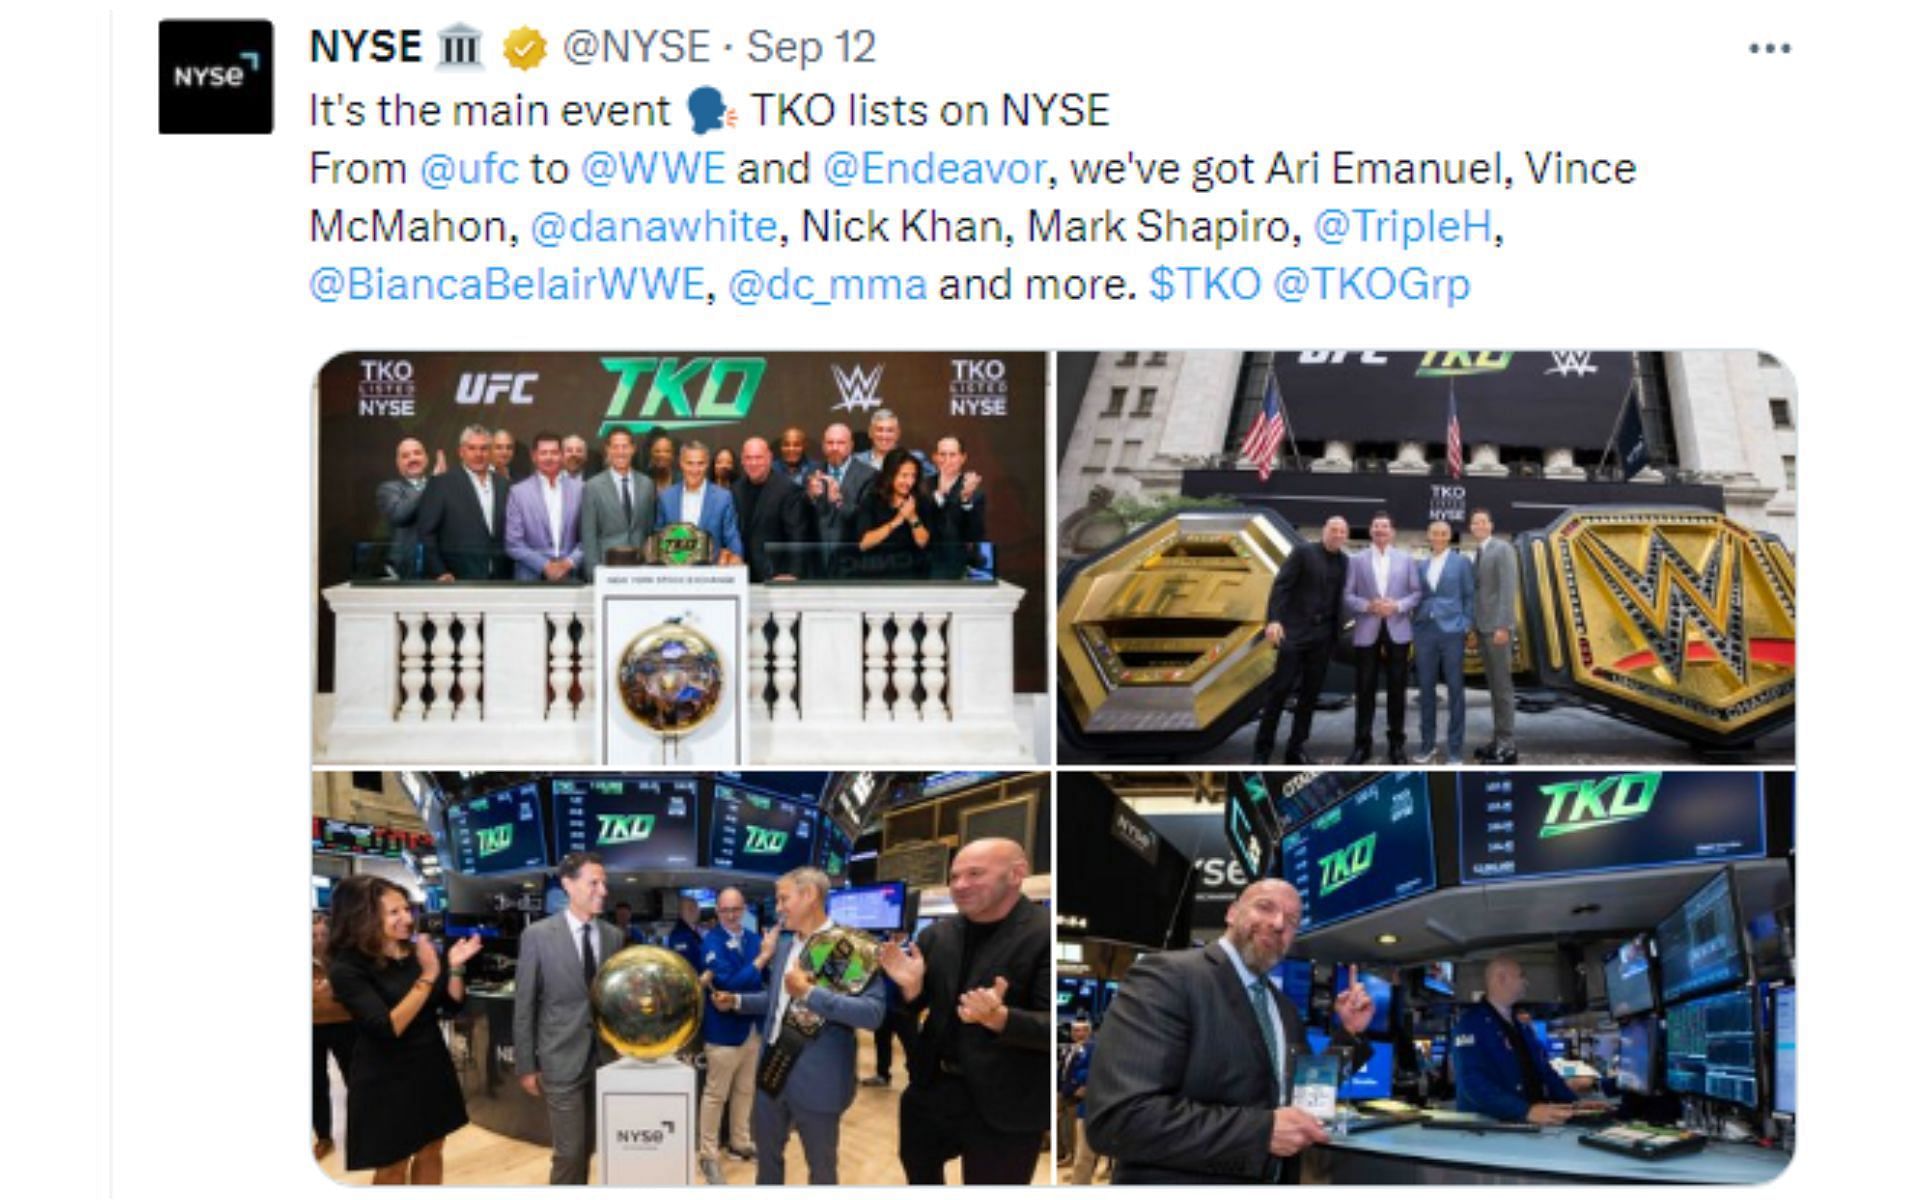 Tweet regarding TKO listing on the NYSE